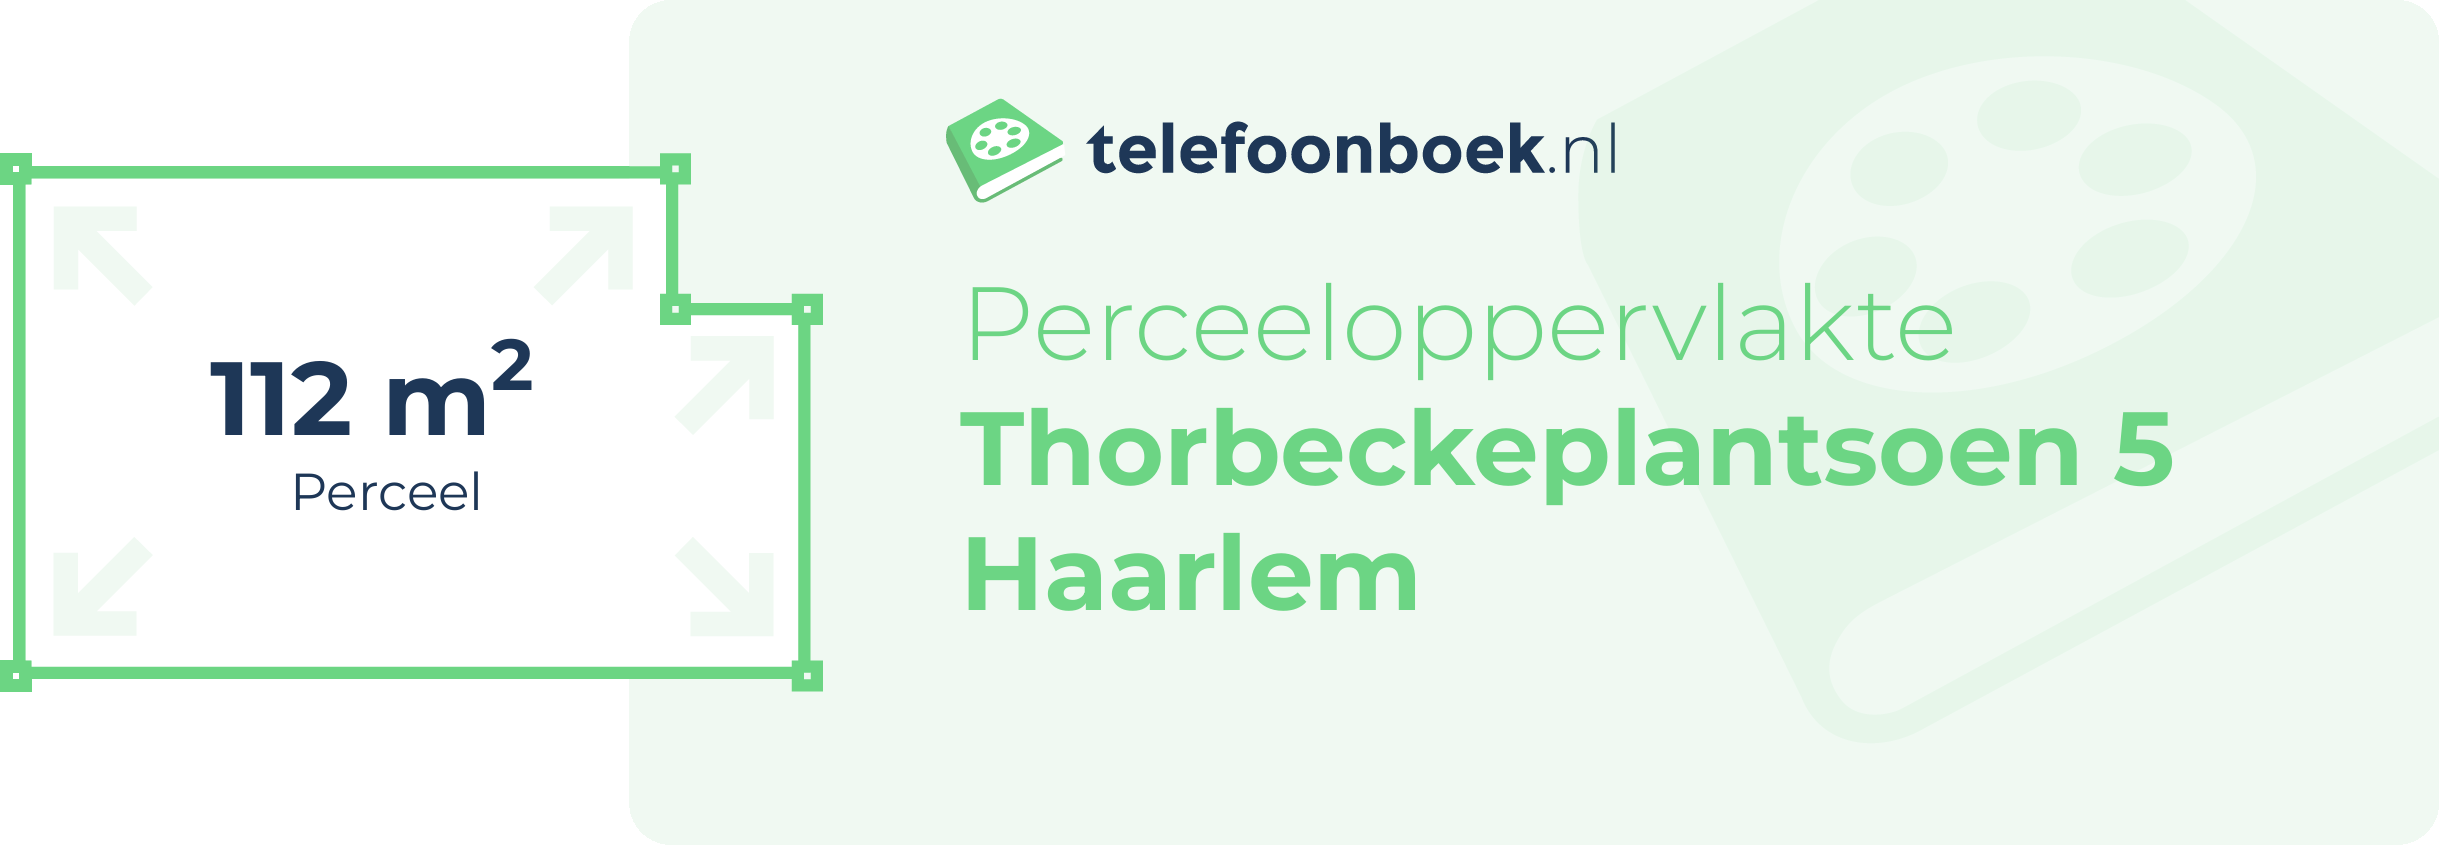 Perceeloppervlakte Thorbeckeplantsoen 5 Haarlem